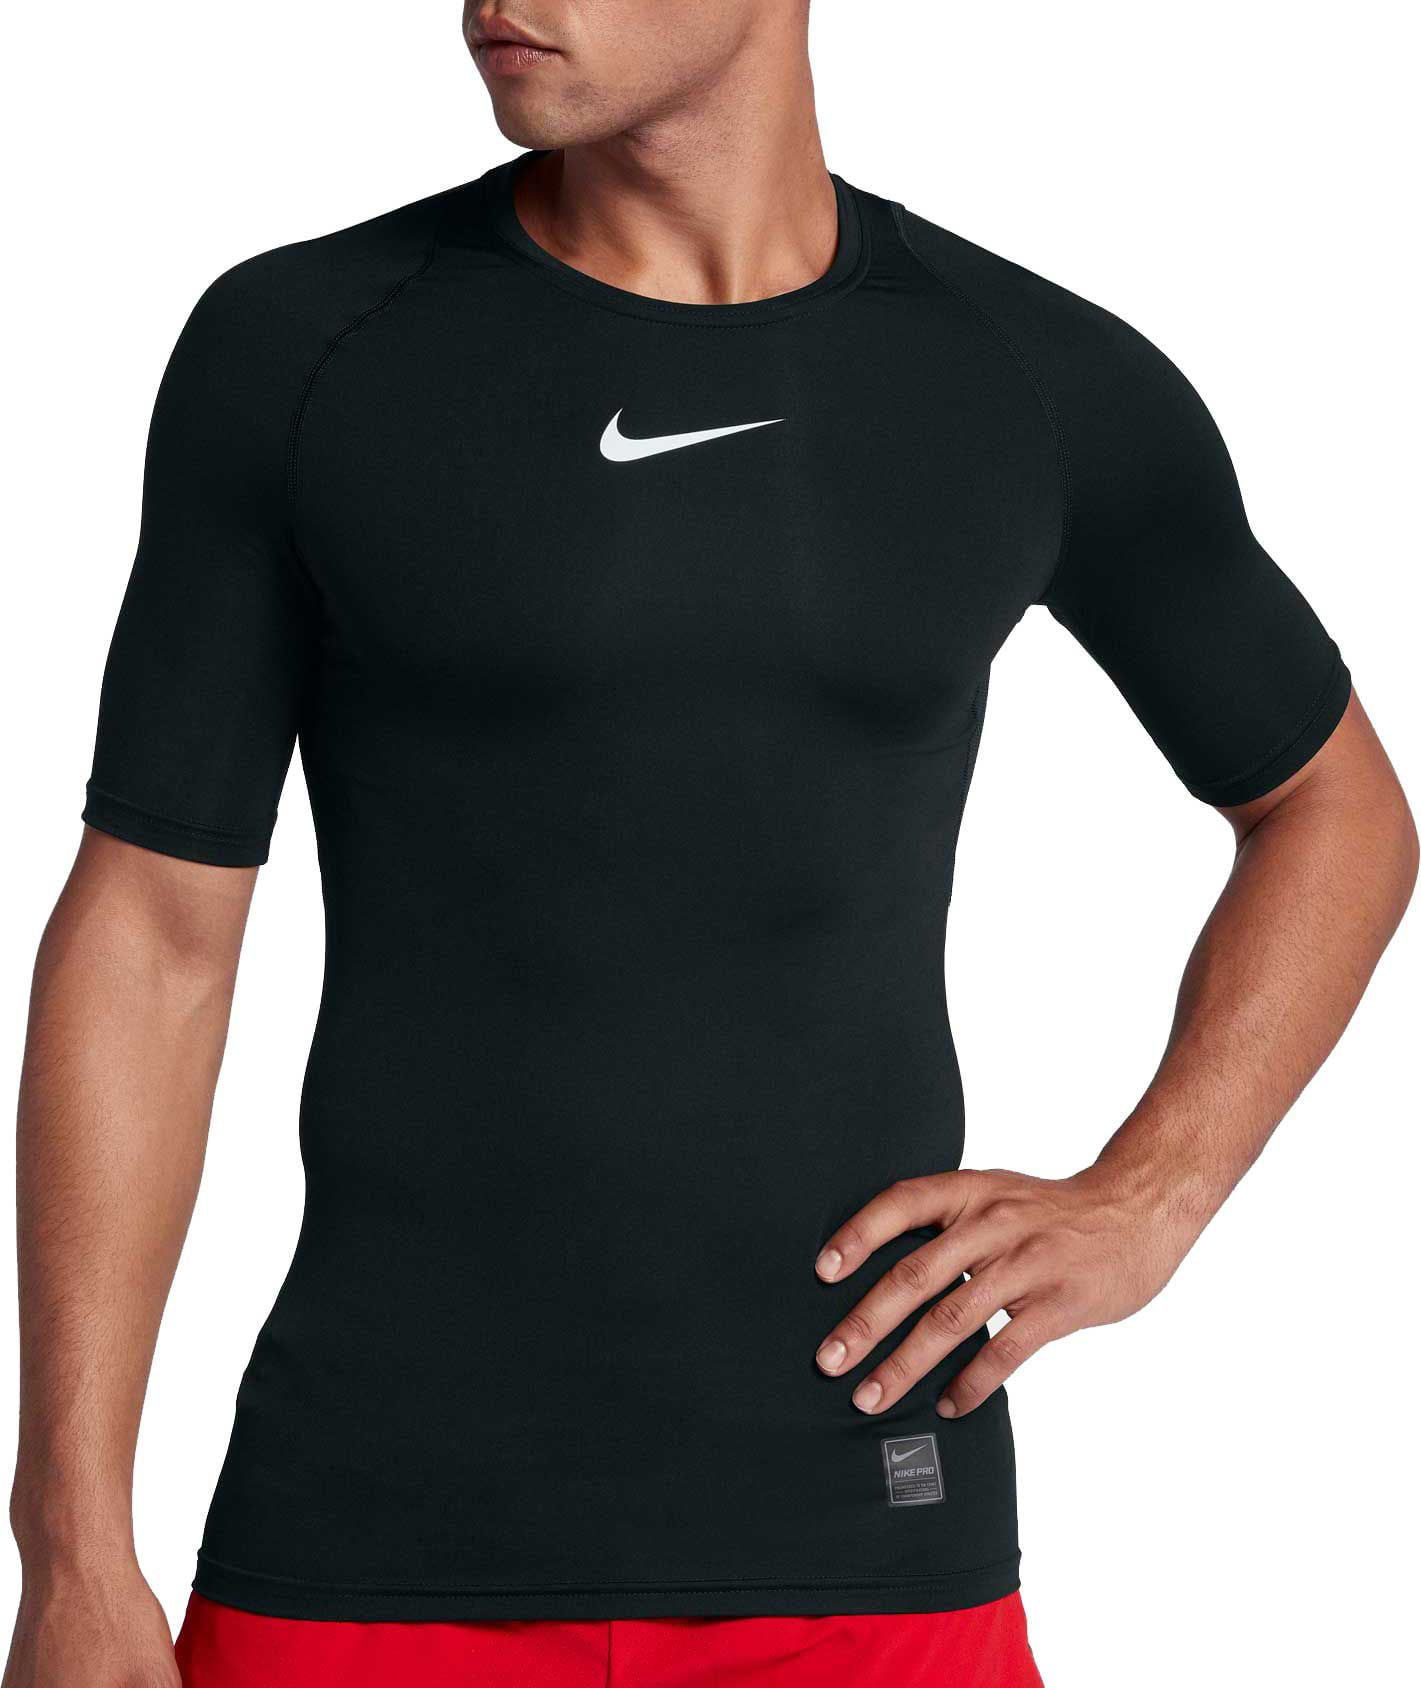 Nike Mens Pro Short Sleeve Compression Top